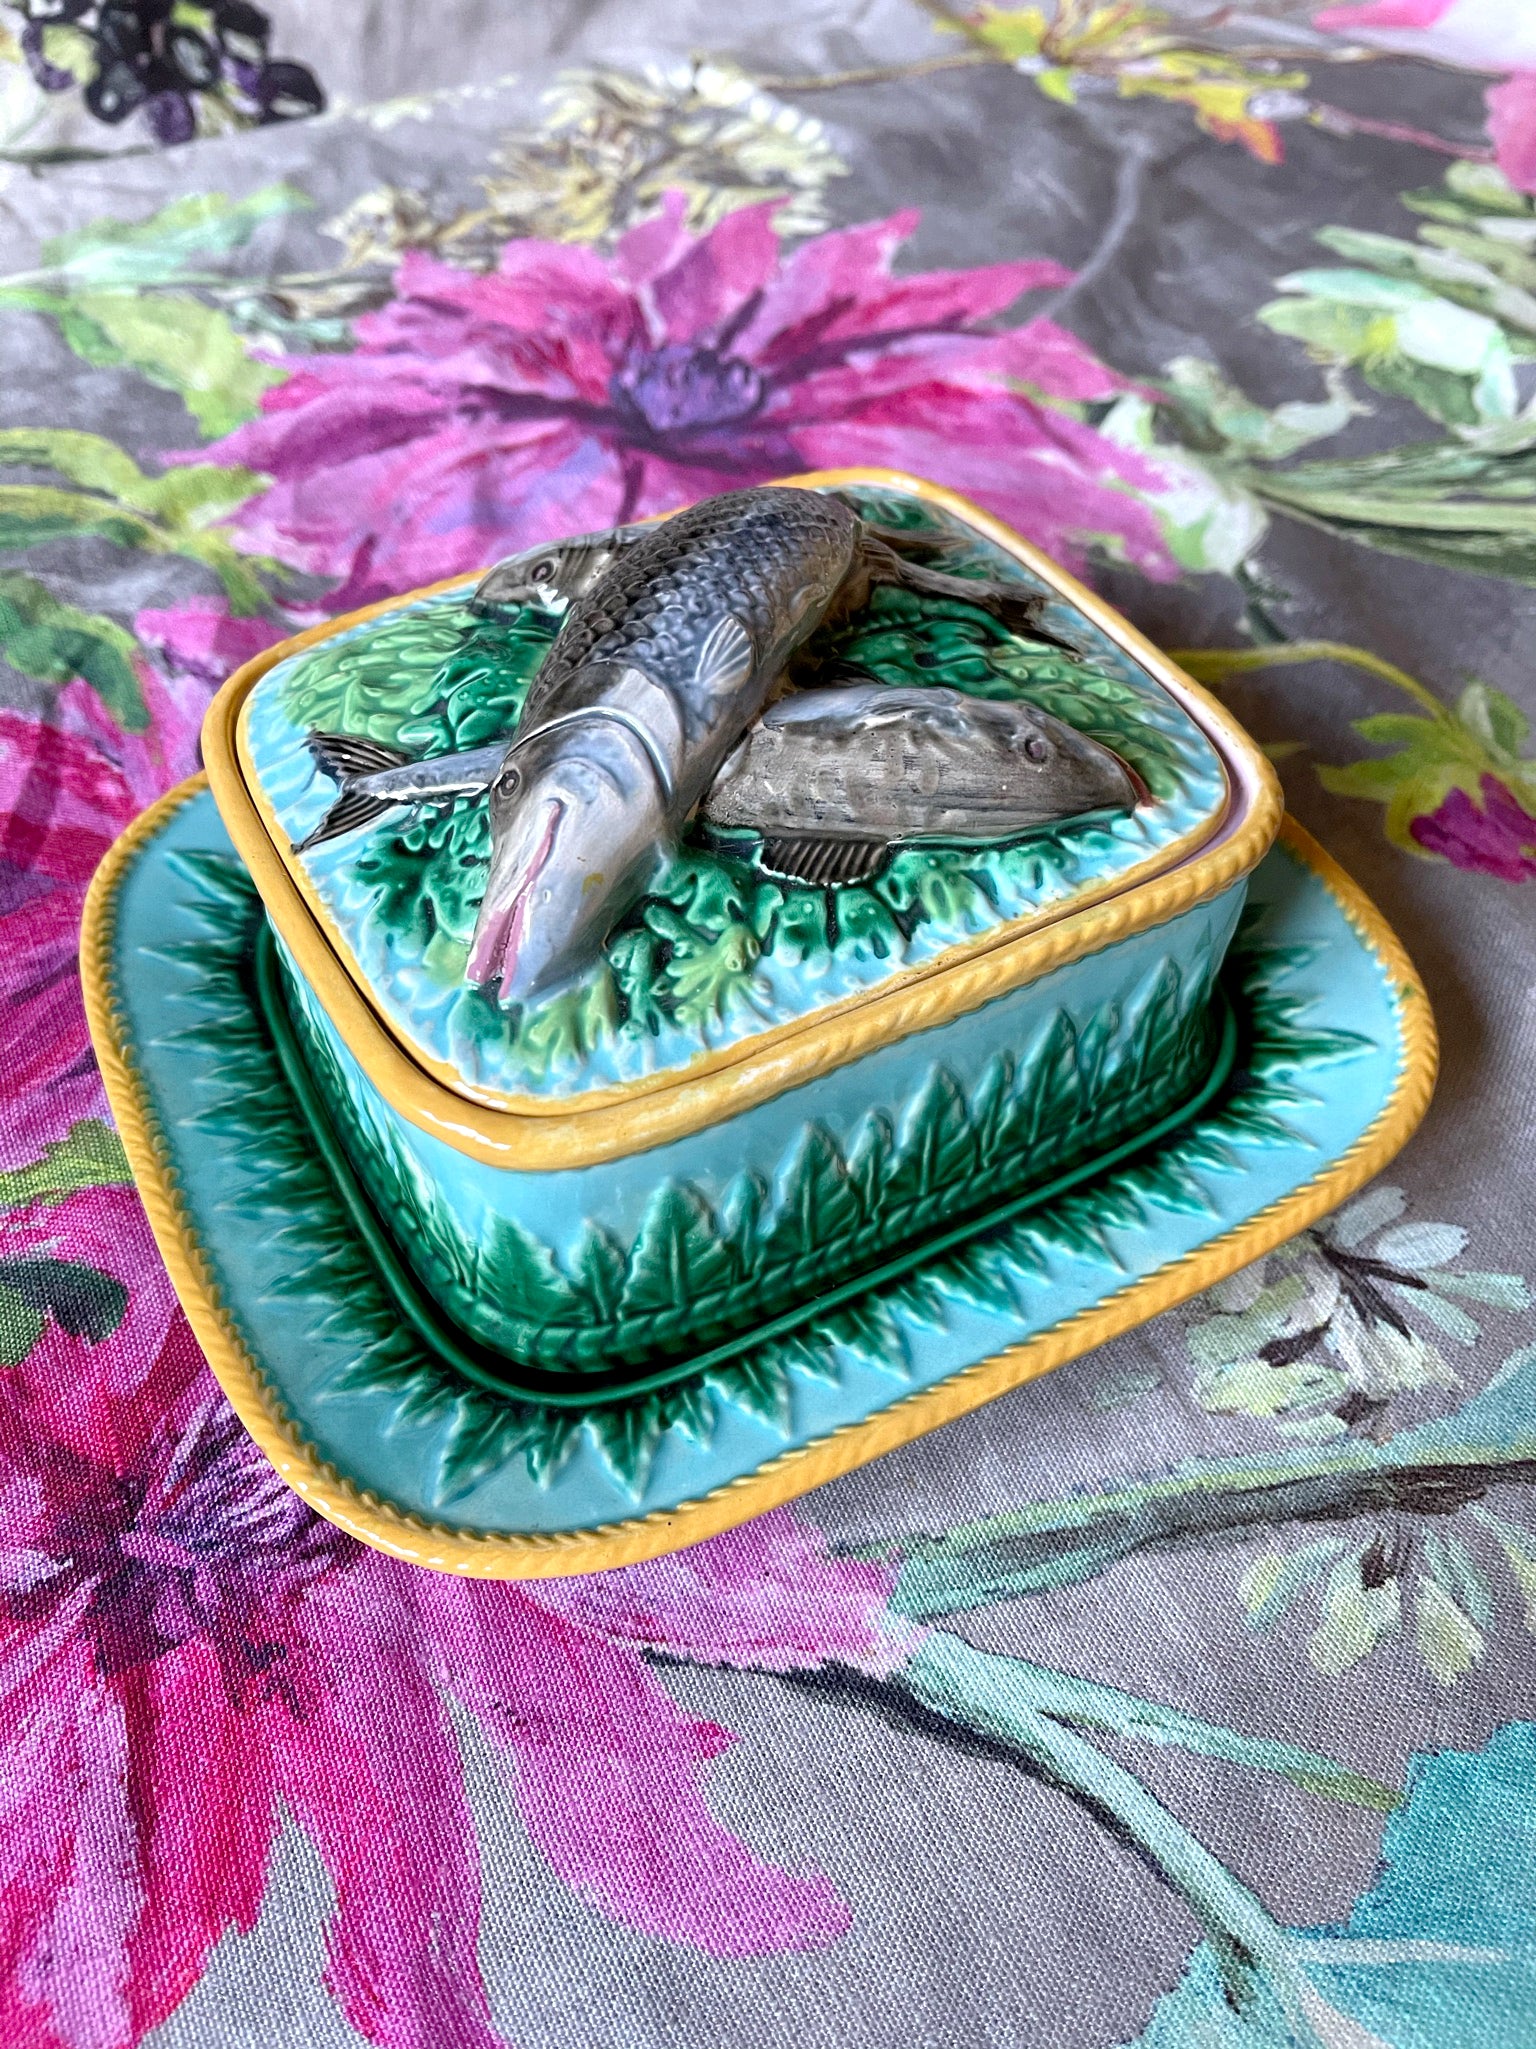 Rare Antique George Jones Sardine Dish with Lid & Plate